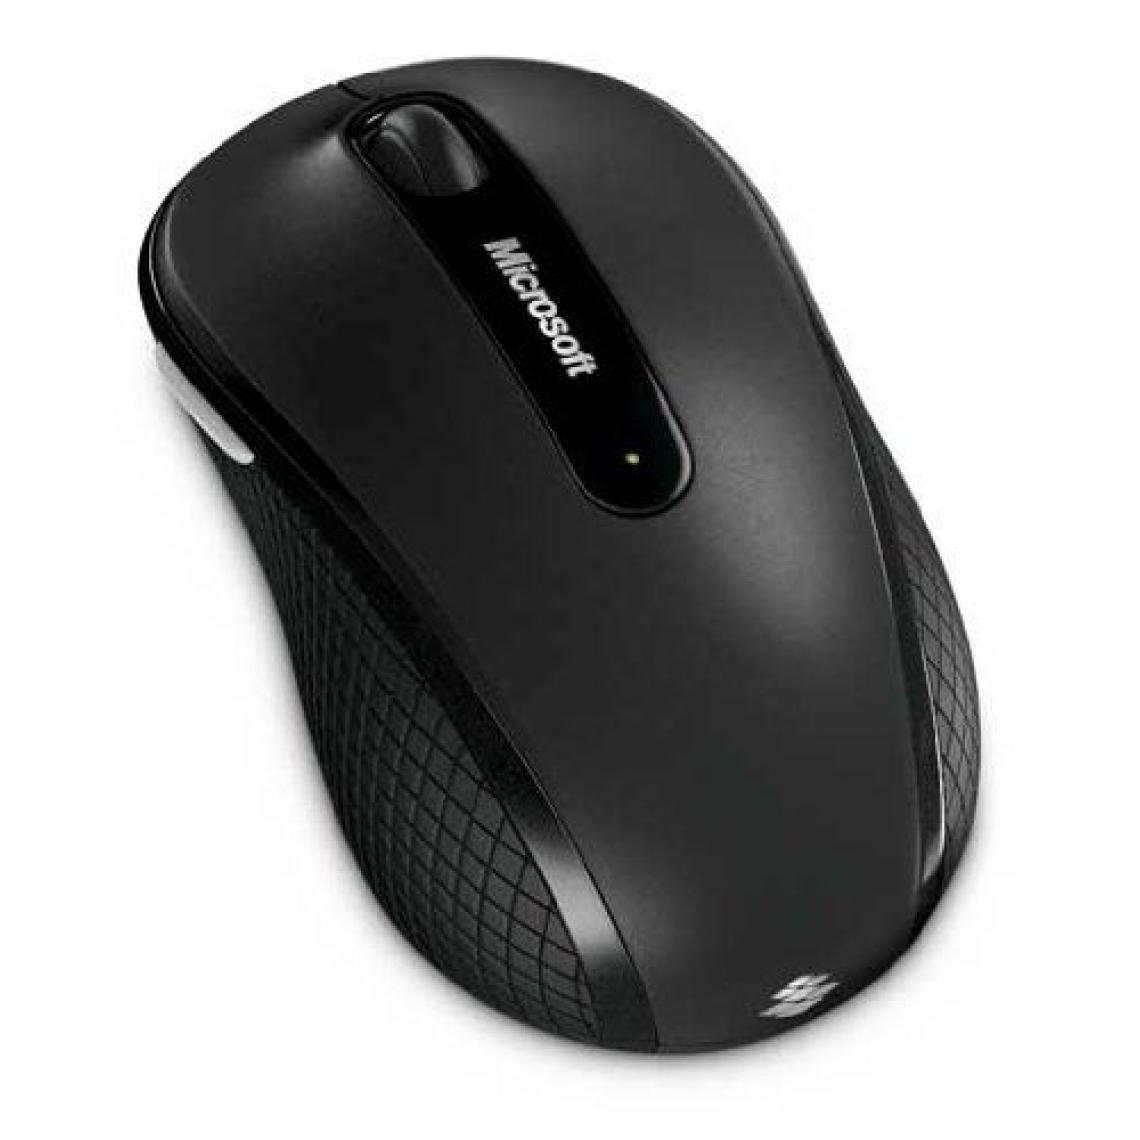 Microsoft - Wireless Mobile Mouse 4000 grau - Souris